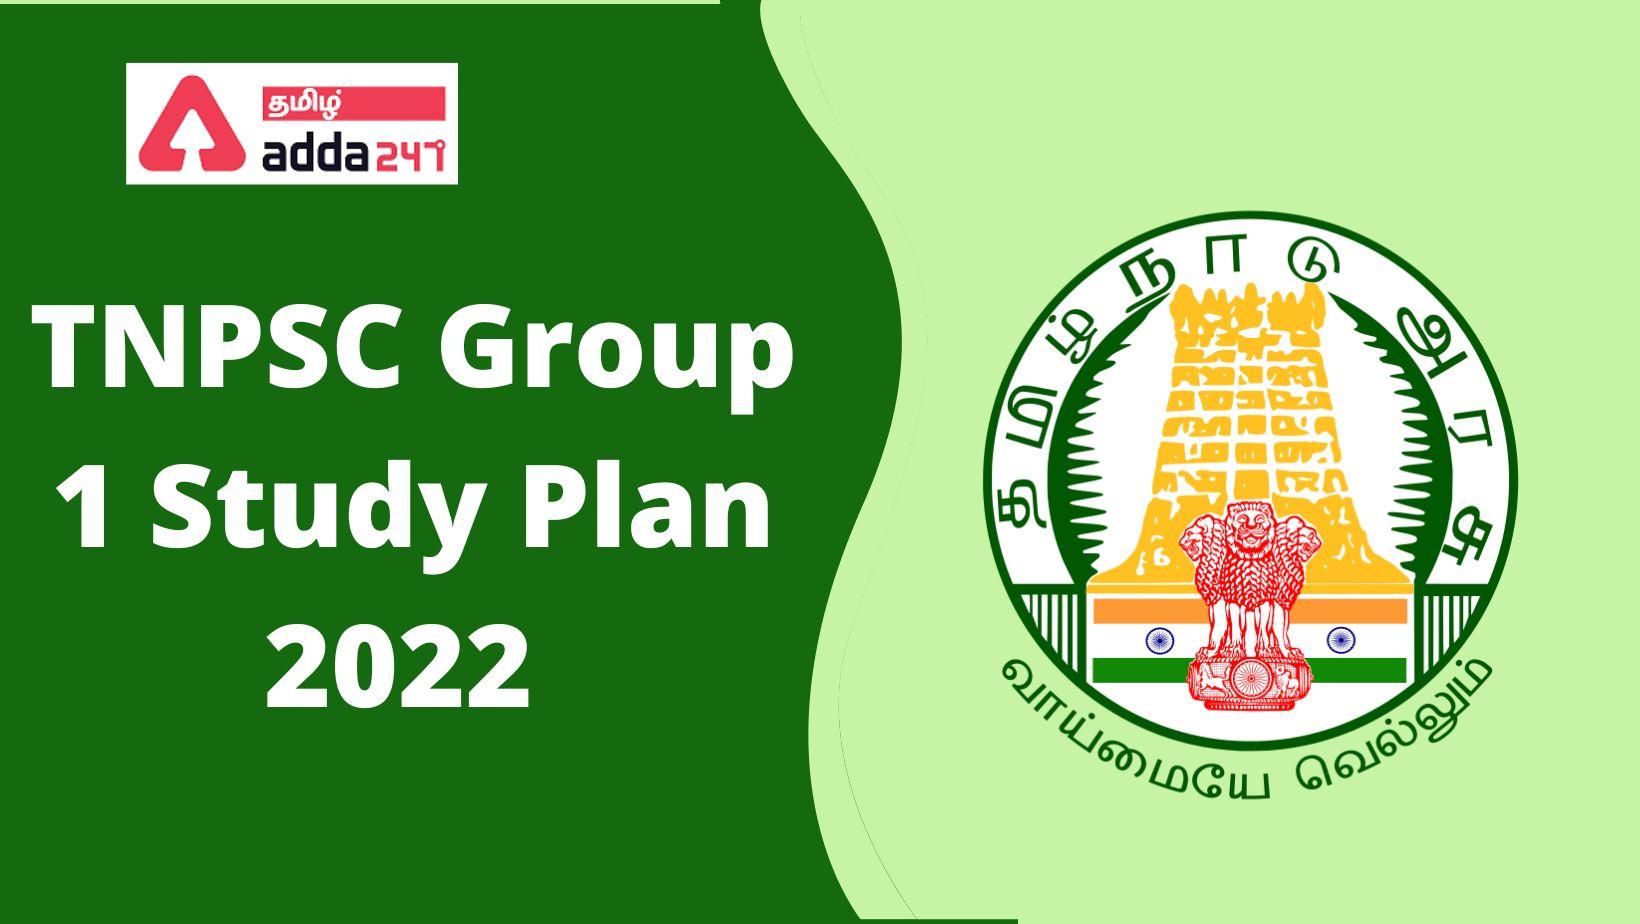 TNPSC Group 1 Prelims Study Plan 2022, Download 65 days Study Plan | TNPSC குரூப் 1 க்கான 65 நாட்கள் படிப்பு திட்ட அட்டவணையை பதிவிறக்கவும்_30.1